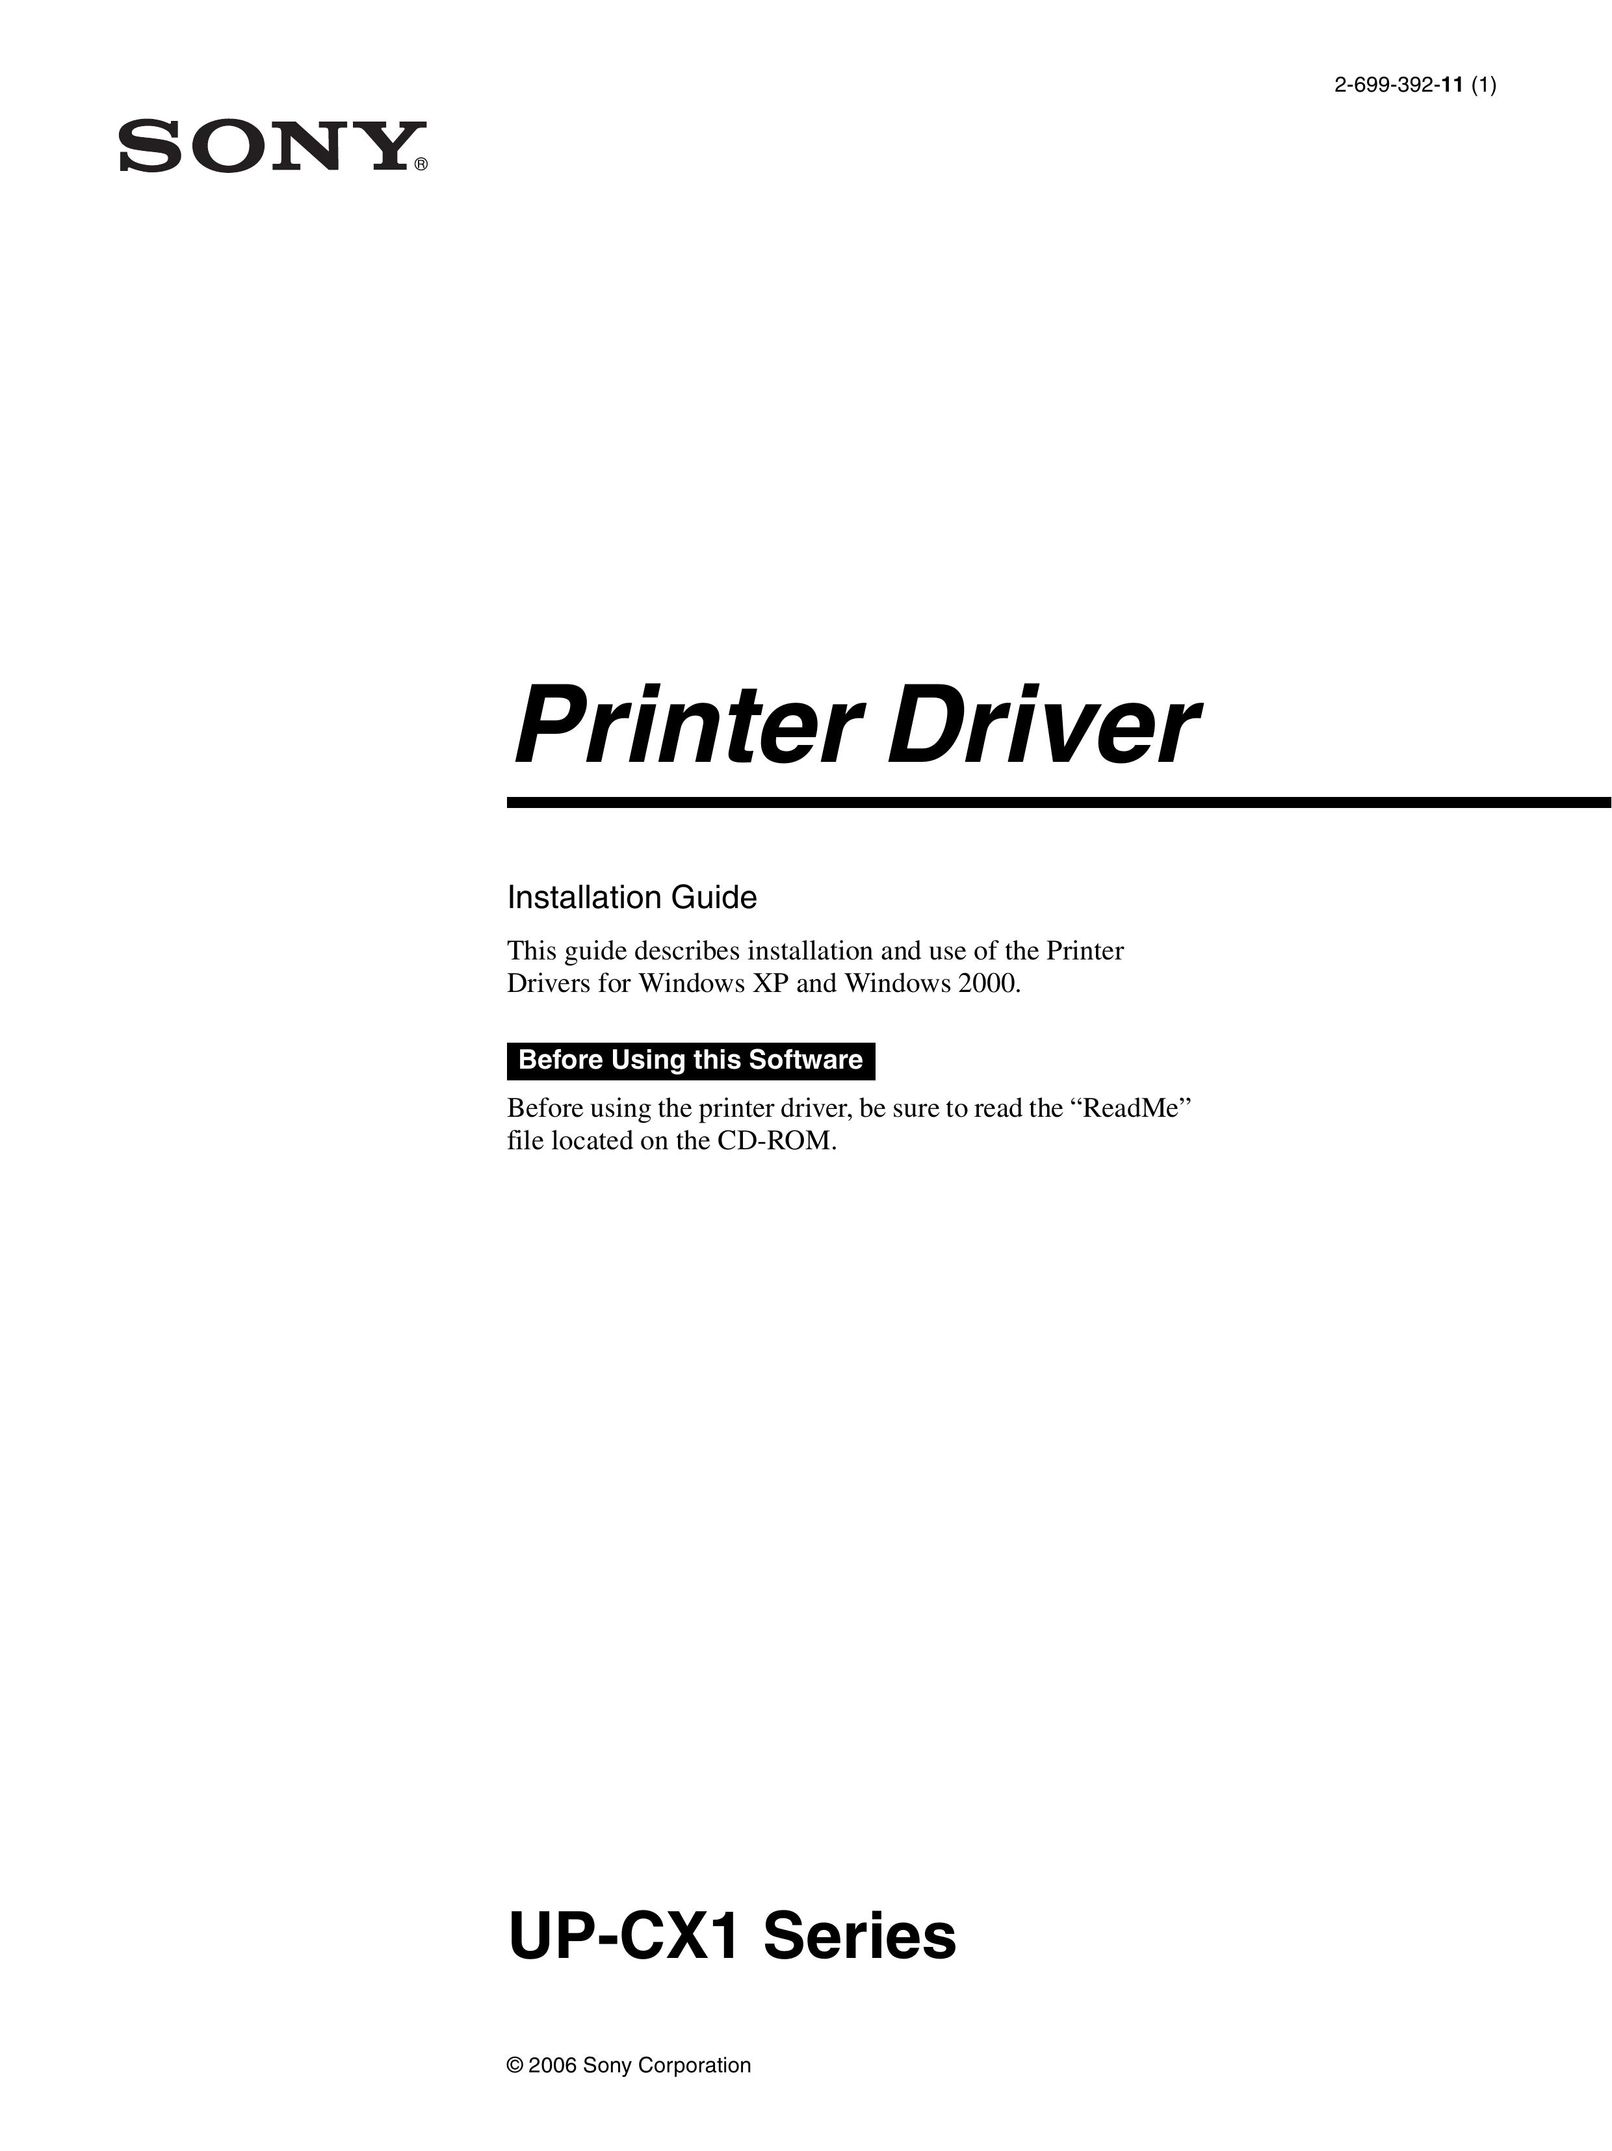 Sony UP-CX1 Printer User Manual